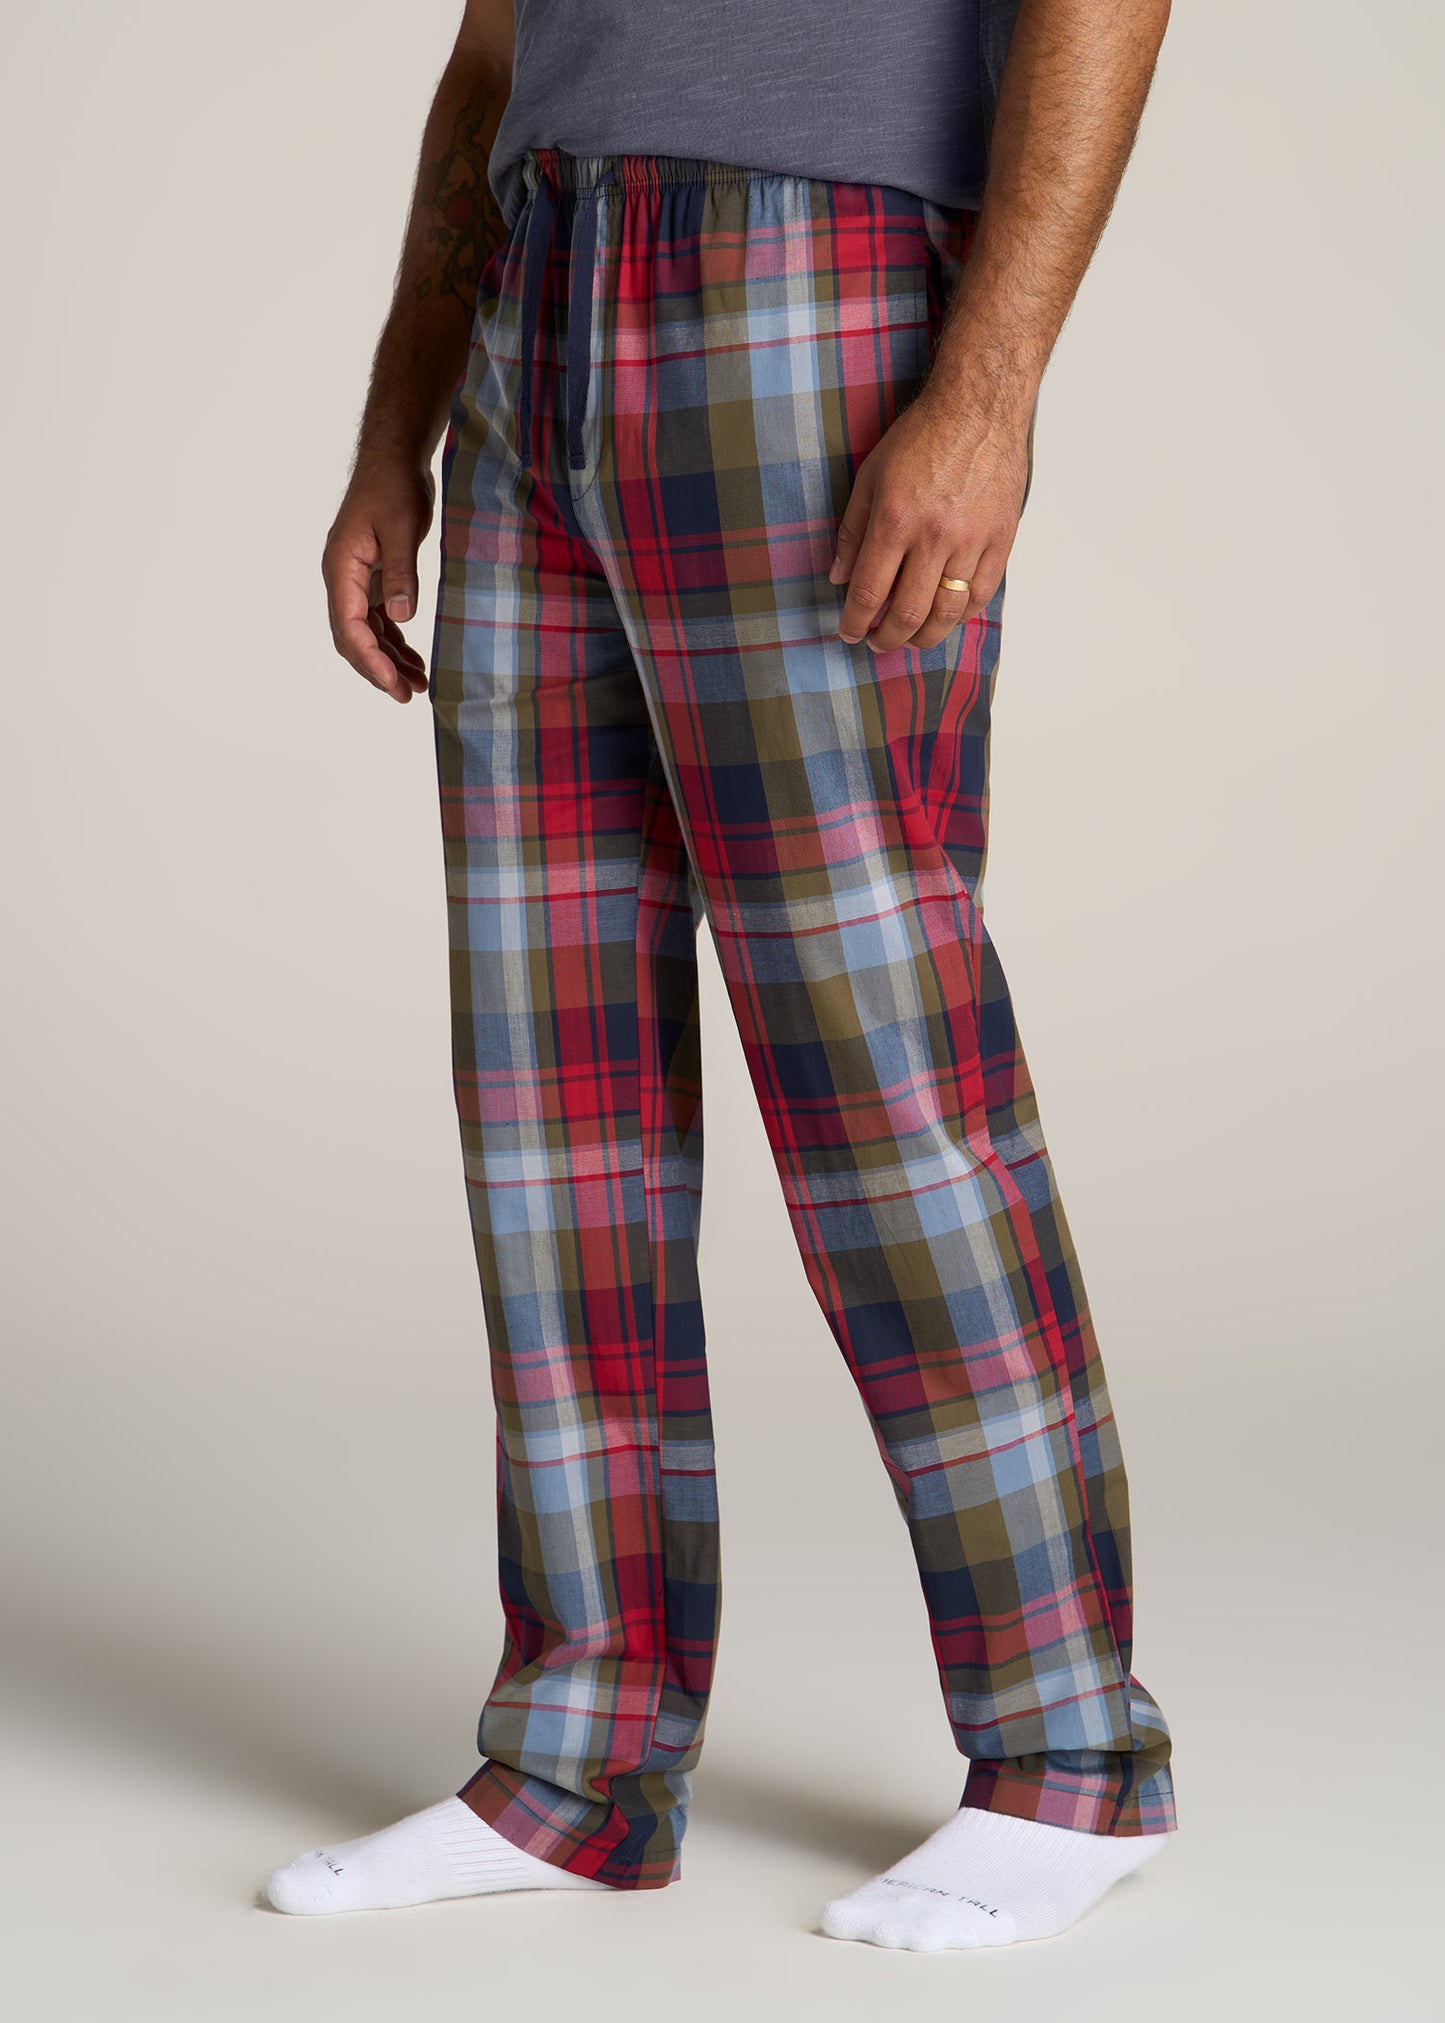 Woven Pajama Pants for Tall Men